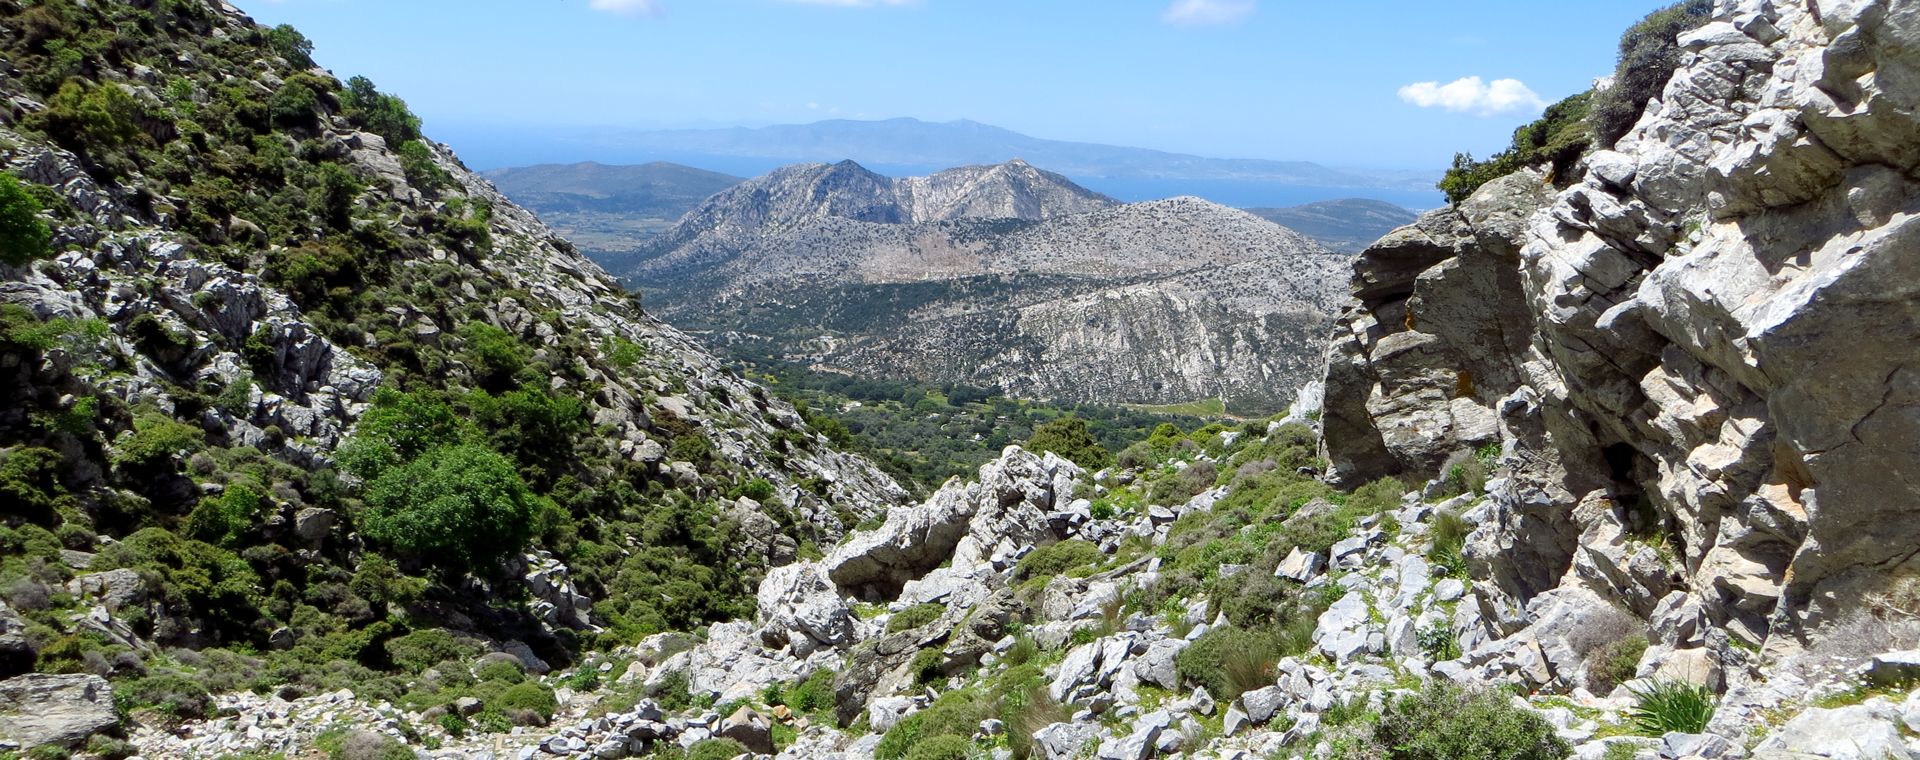 Naxos mountains landscape